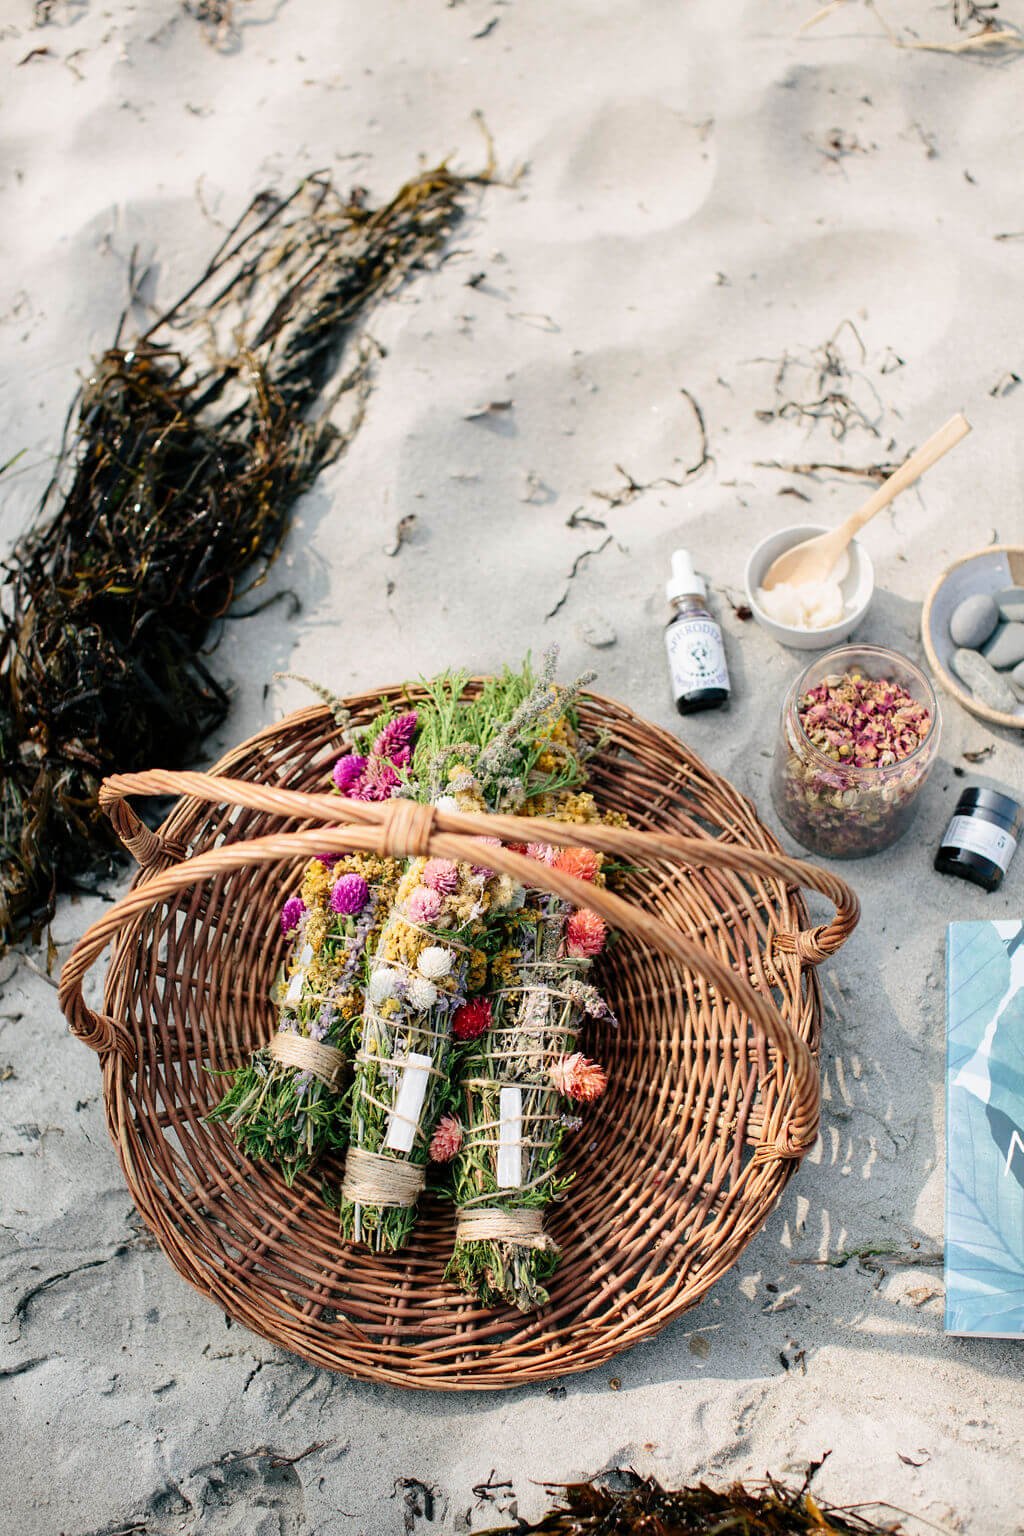 flowers and holistic wellness products on beach.jpg